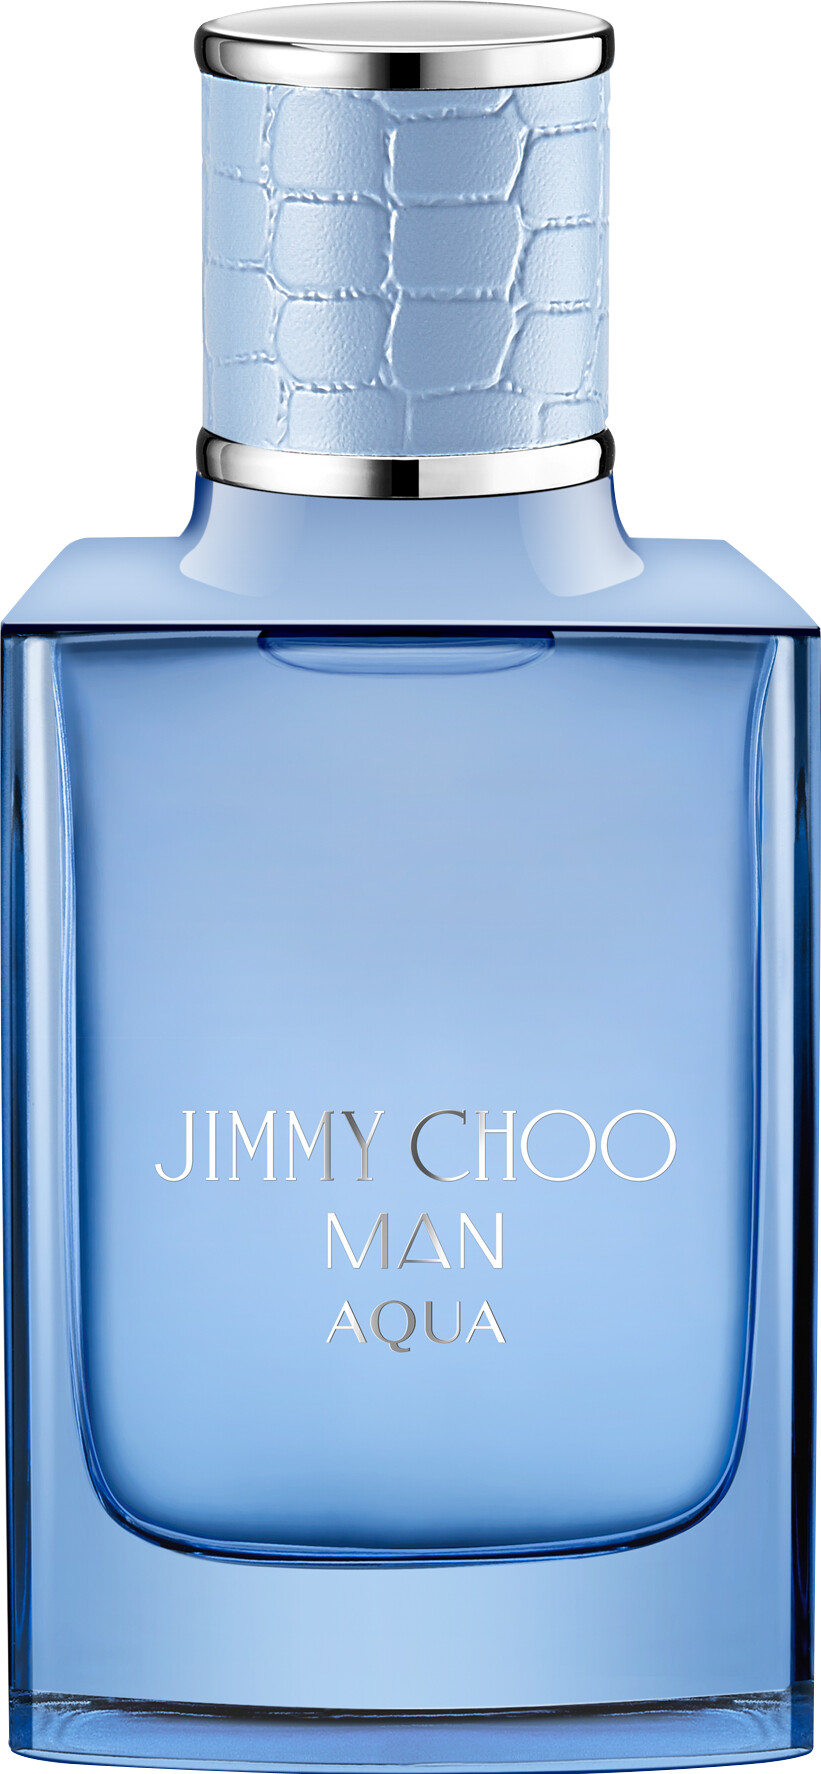 Jimmy Choo Man  Aqua Eau de Toilette Spray 30ml